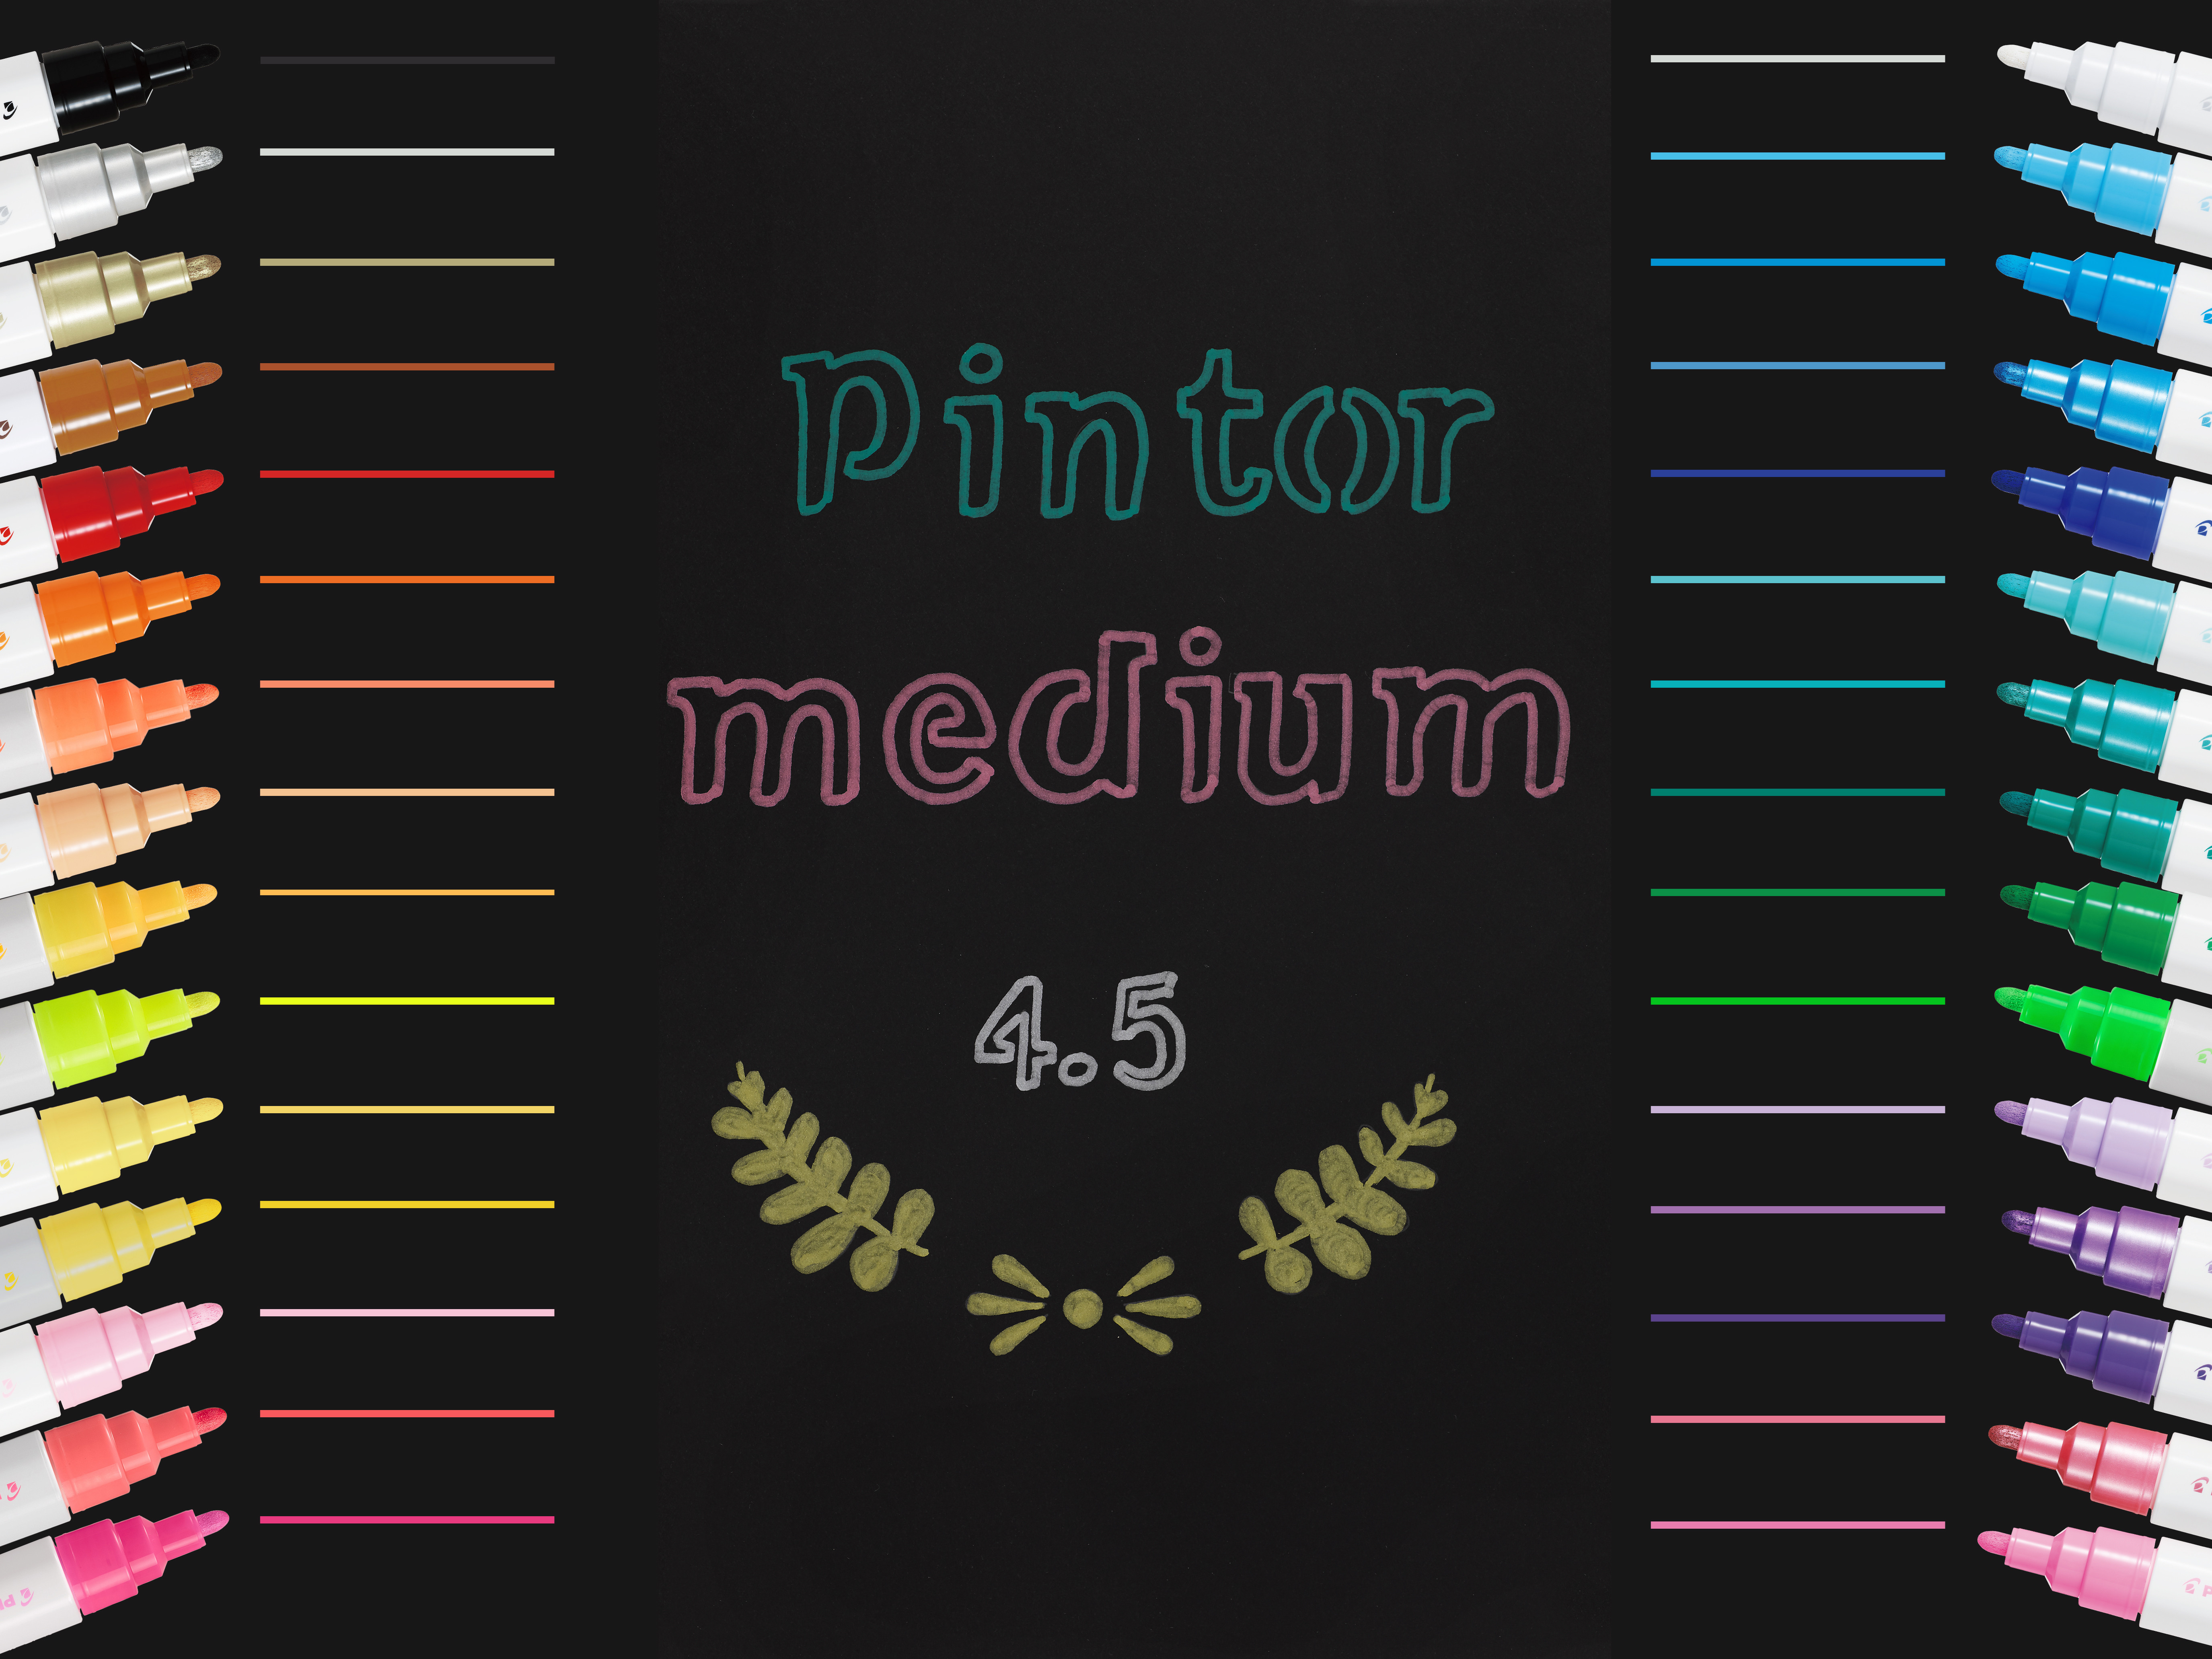 PINTOR My Colour Palette 4.5 (M)